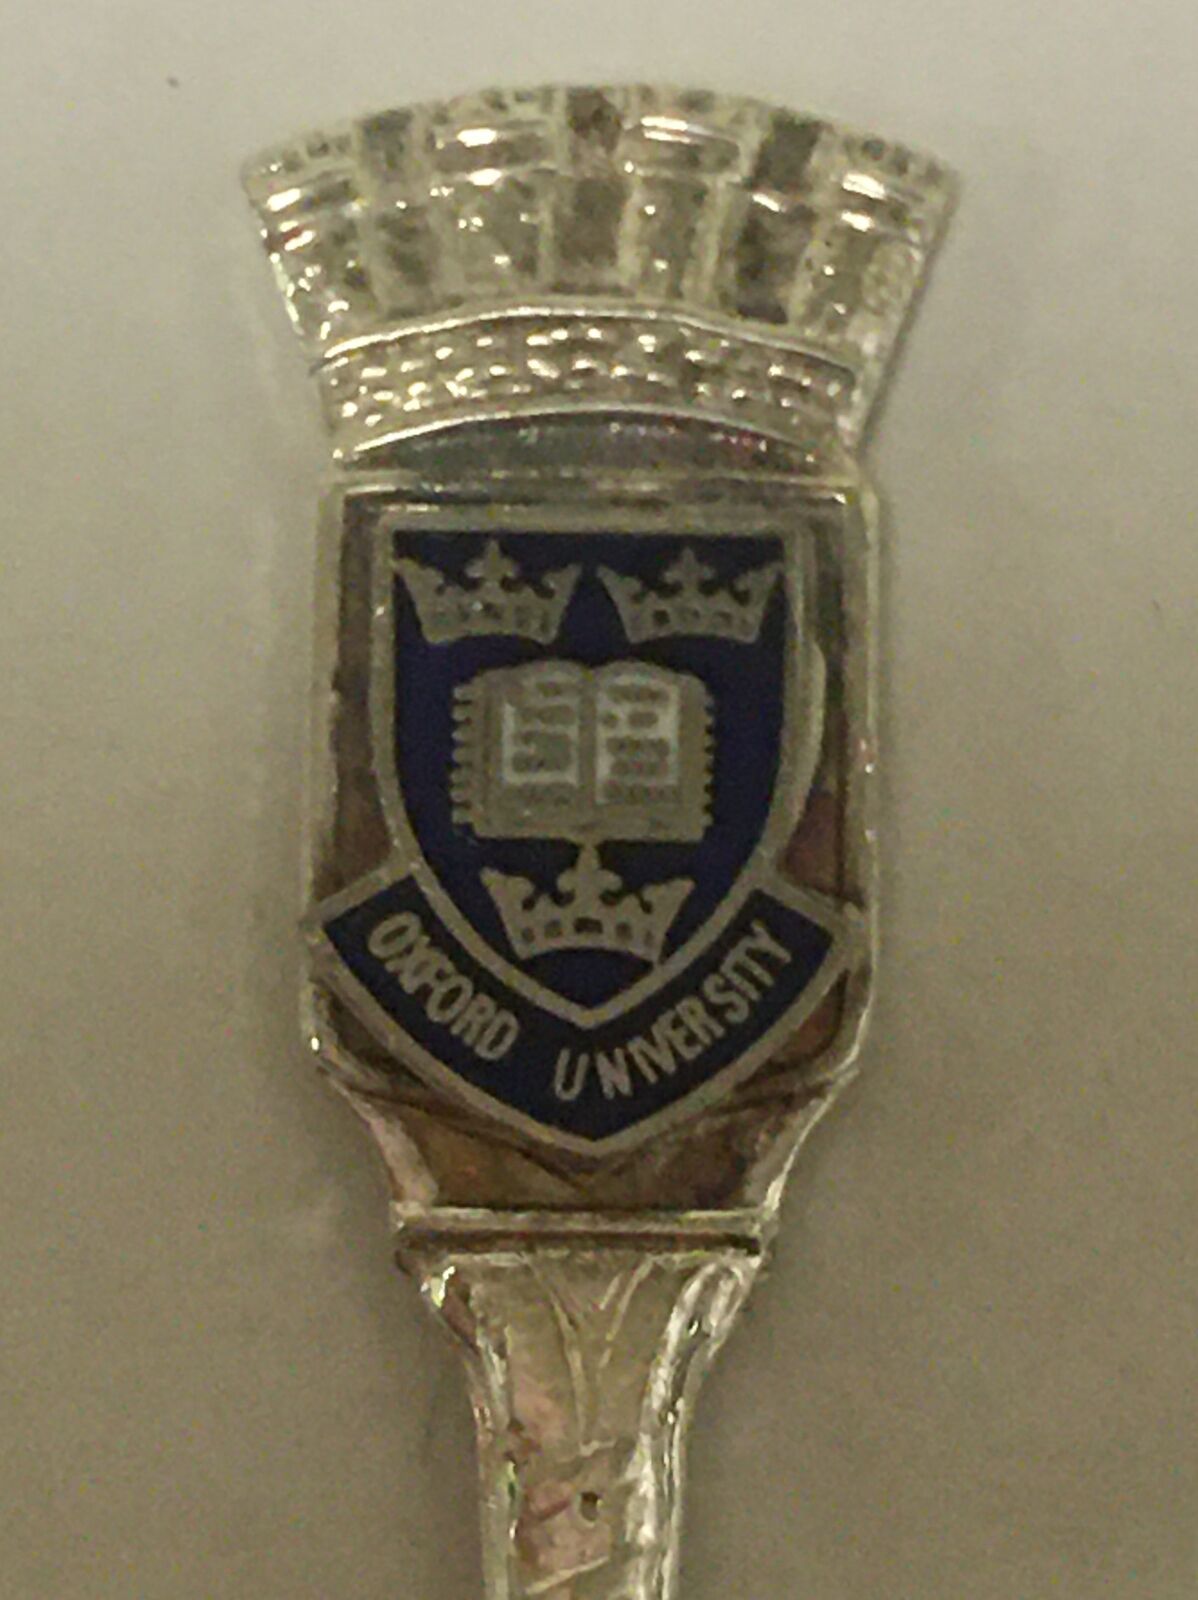 Oxford University Vintage Souvenir Spoon Collectible